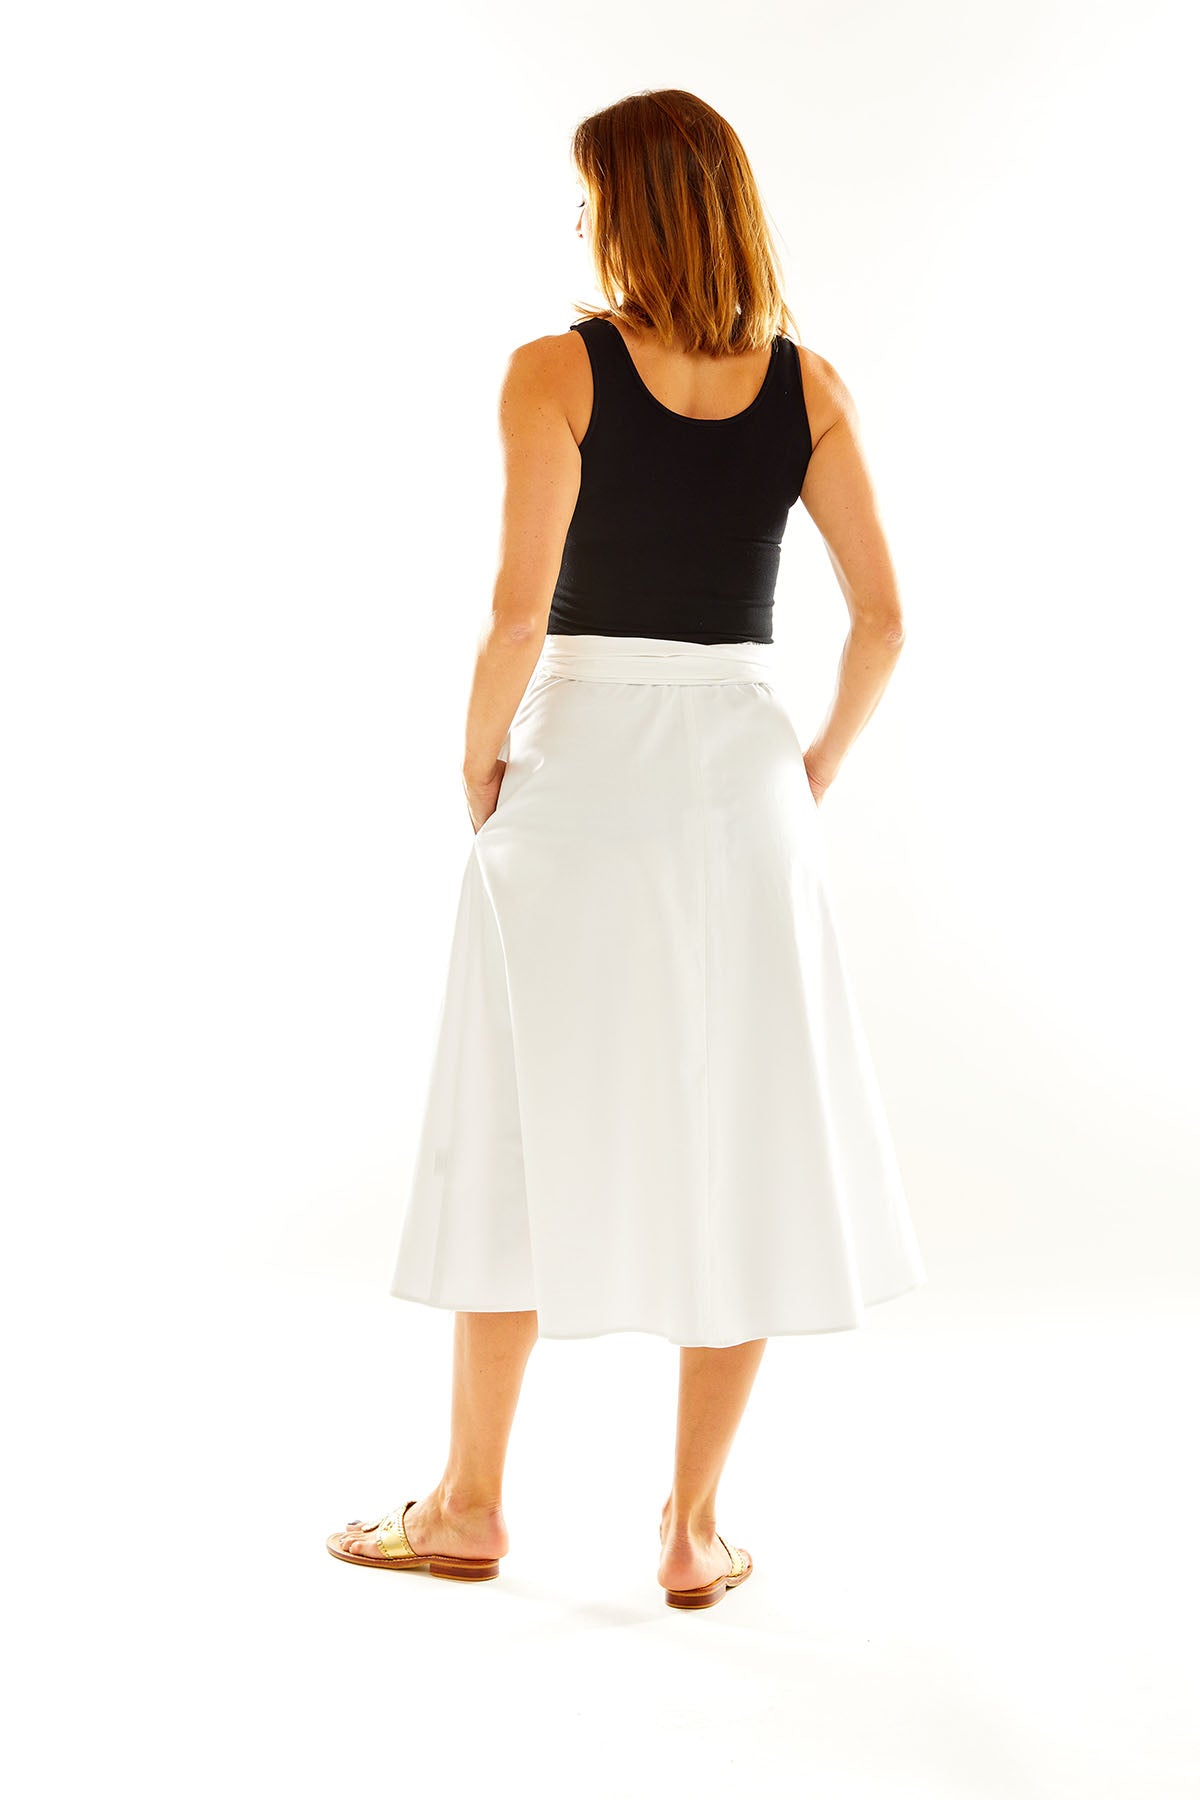 Woman in white midi skirt